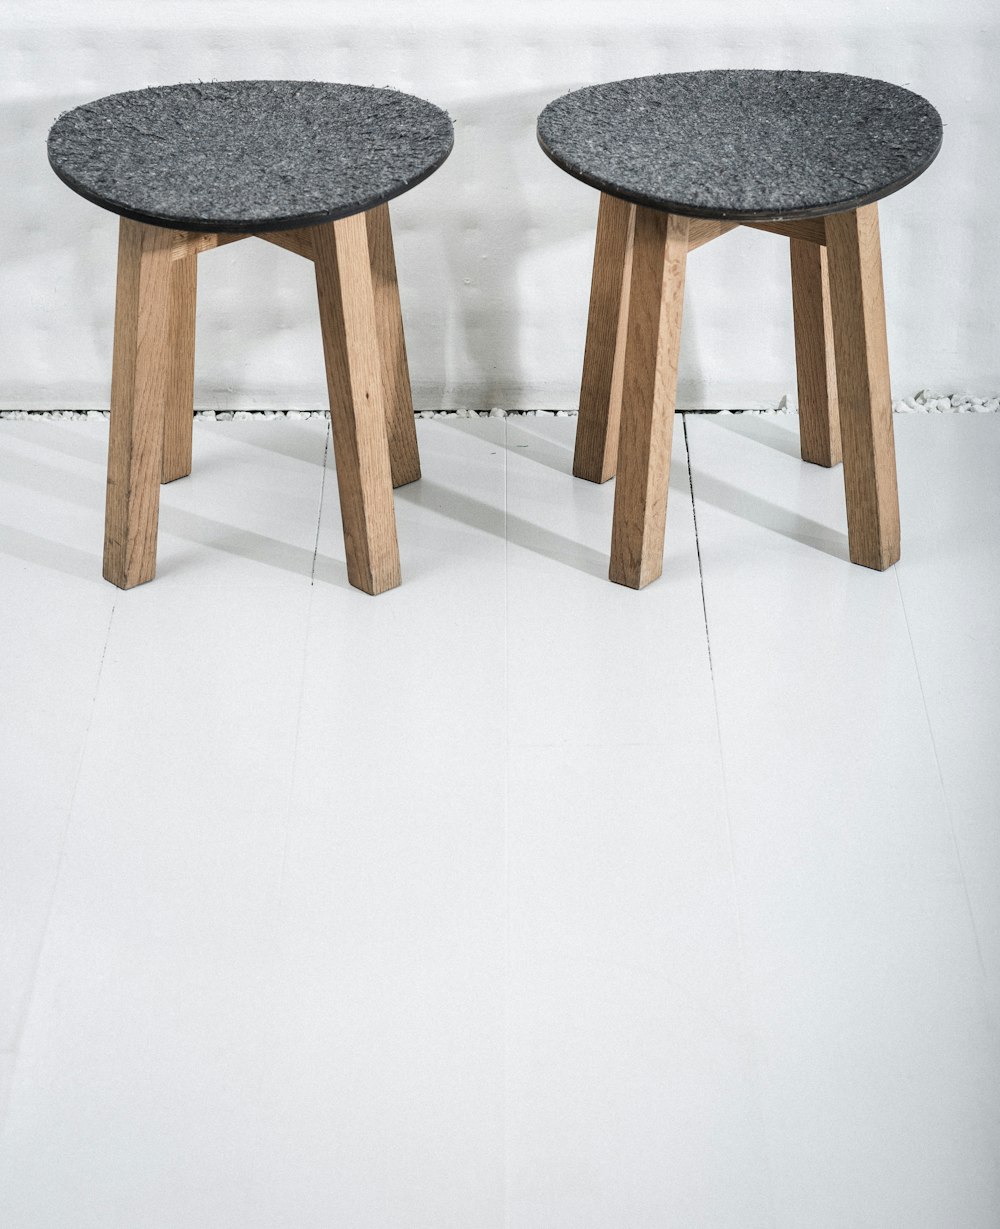 2 gray and brown stools